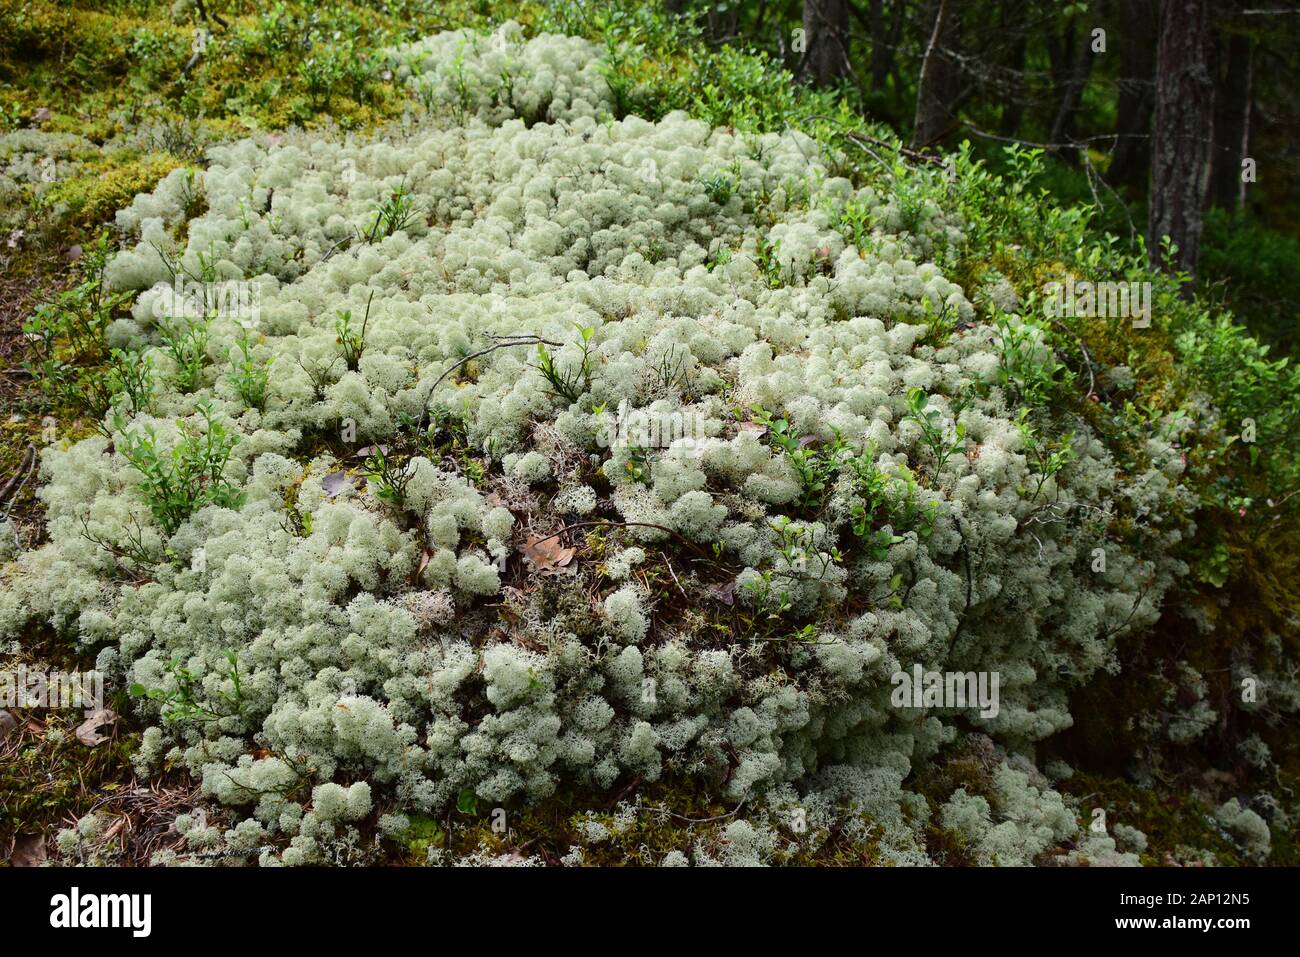 Pillowy Reindeer Lichen (Cladonia rangiferina) covering the forest floor. Sweden Stock Photo